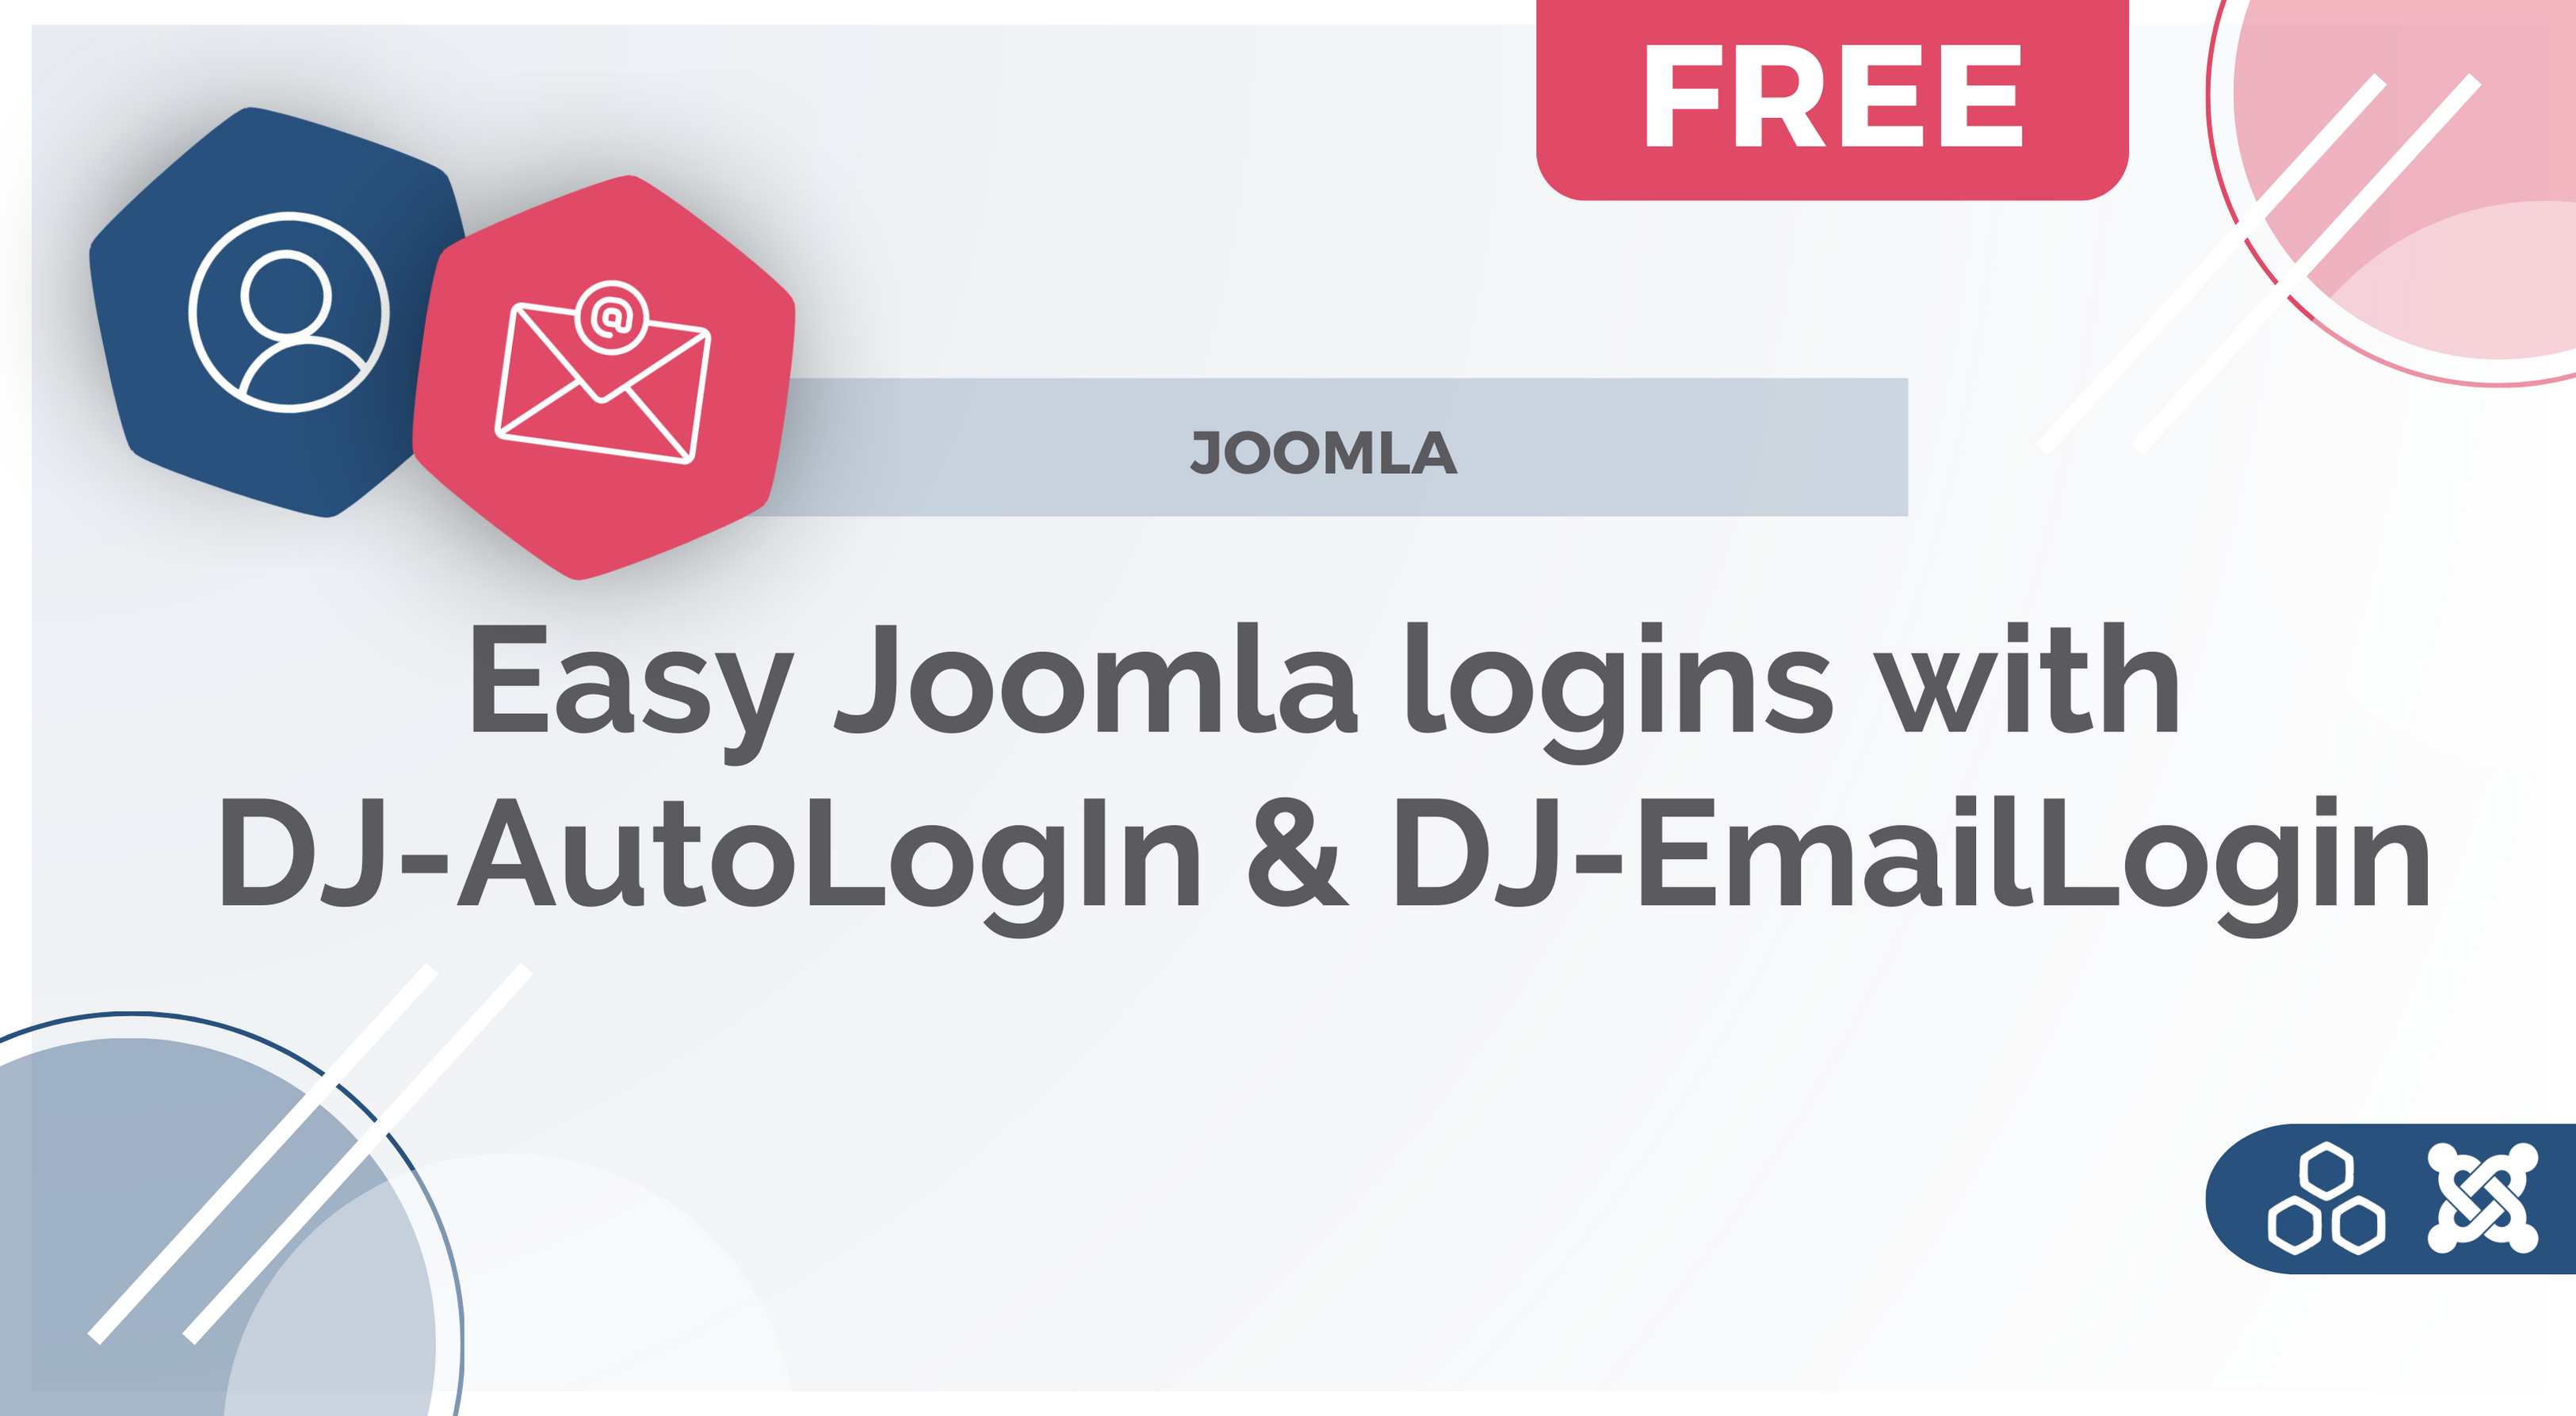 Streamline your user experience: Introducing DJ-AutoLogIn & DJ-EmailLogin Free Joomla Plugins!